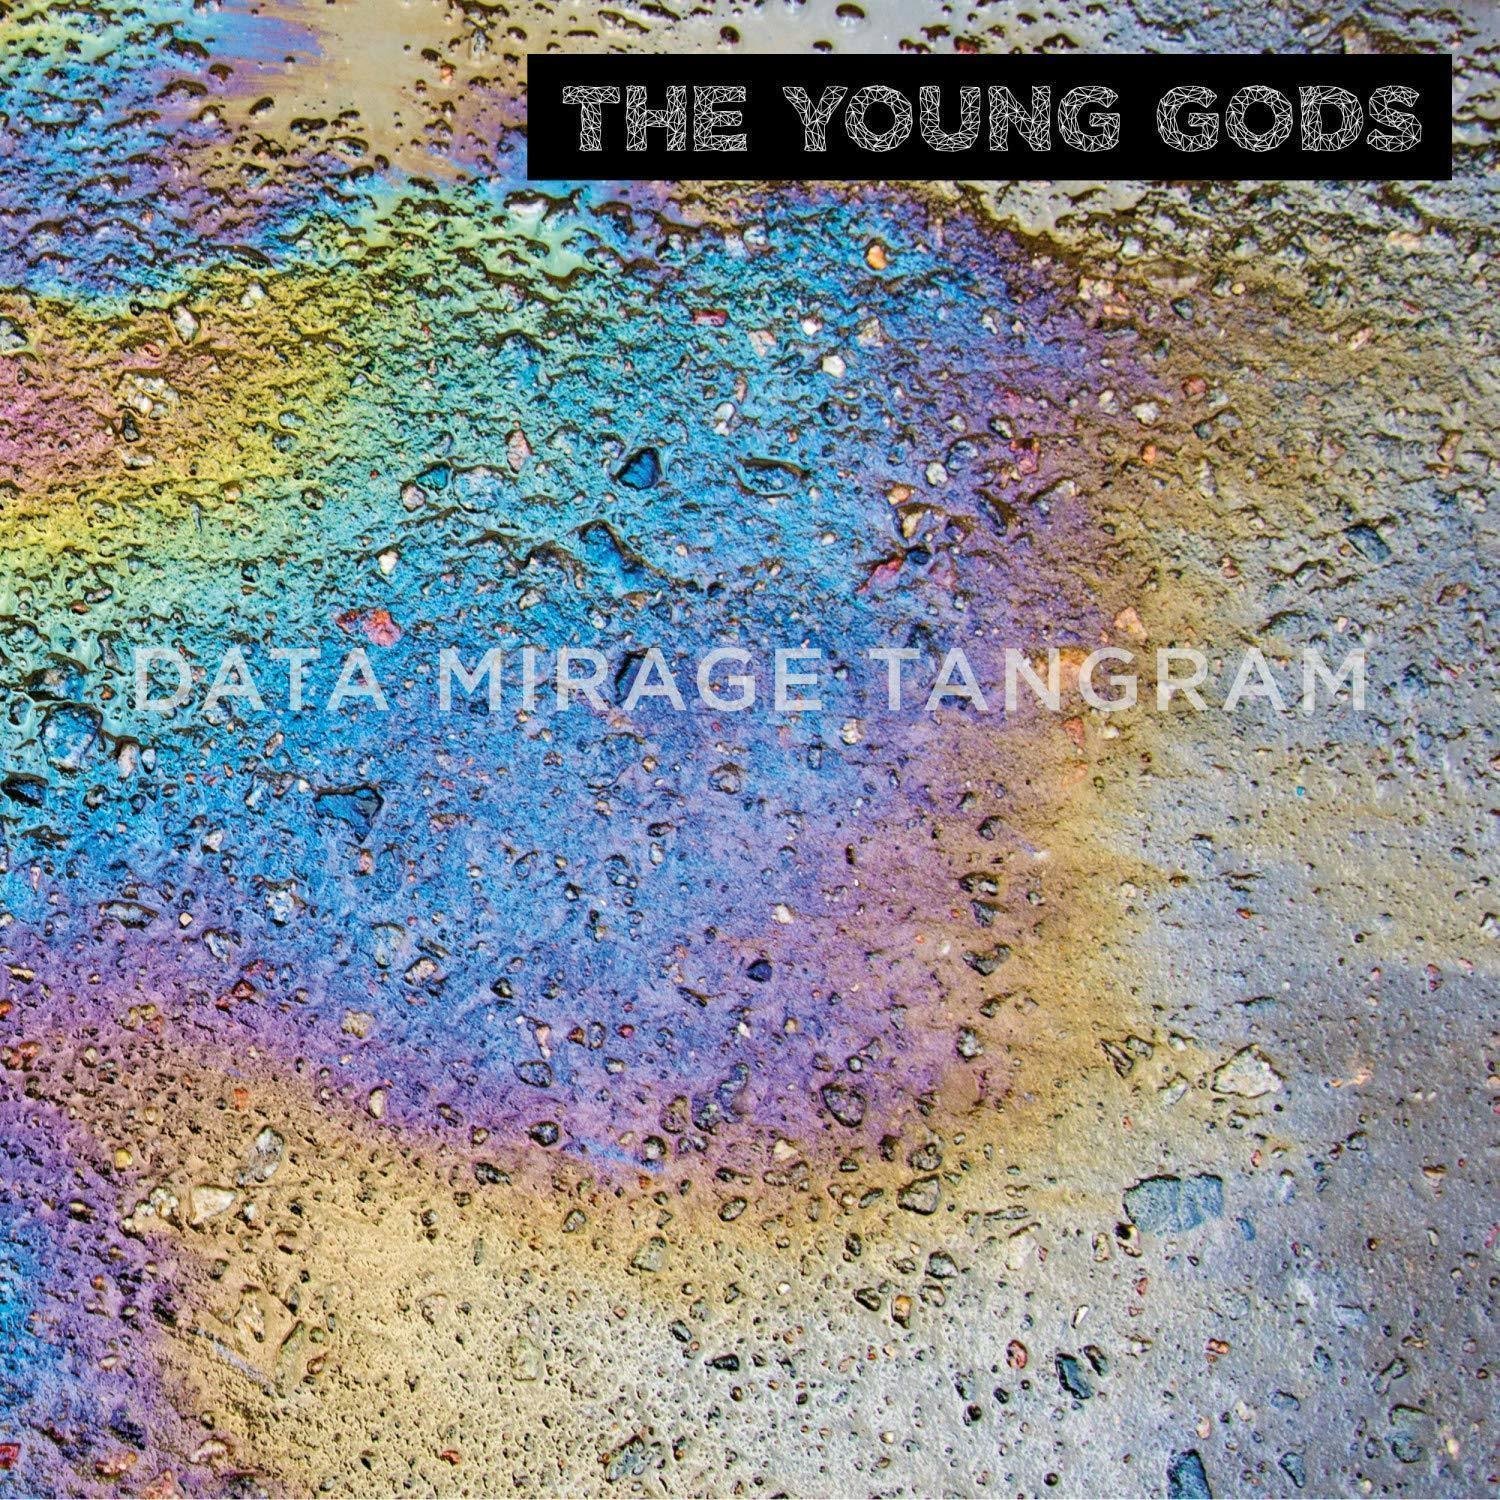 Płyta winylowa The Young Gods Data Mirage Tangram (2 LP + CD)